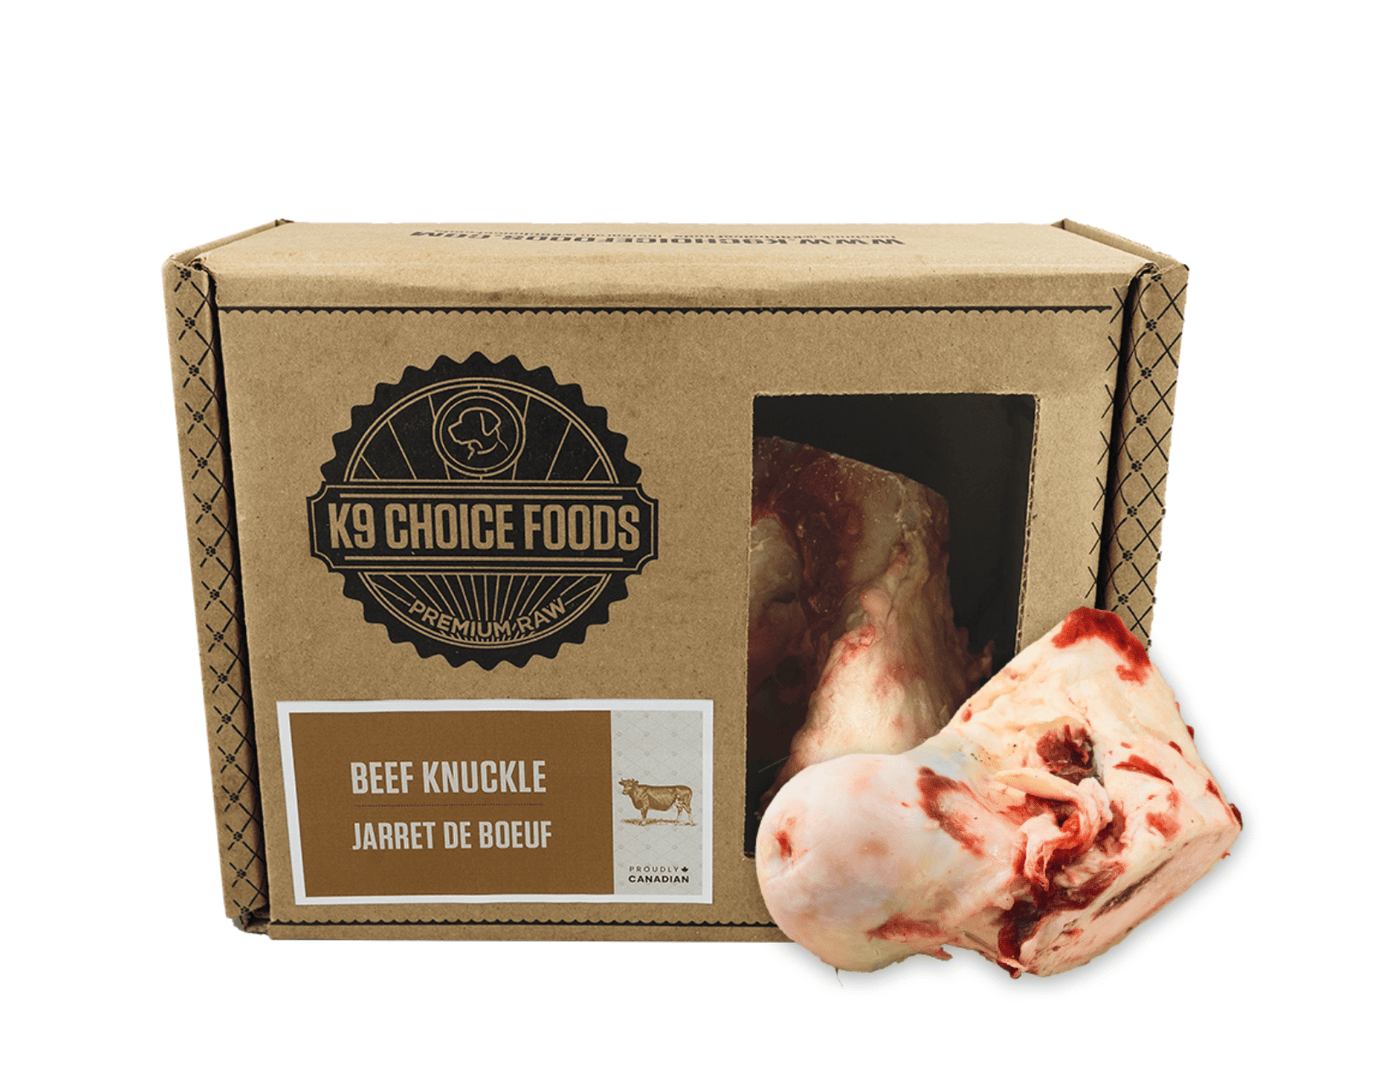 K9 Choice - Beef Knuckle - 2 Pack in Bone Box, Frozen Dog Chew